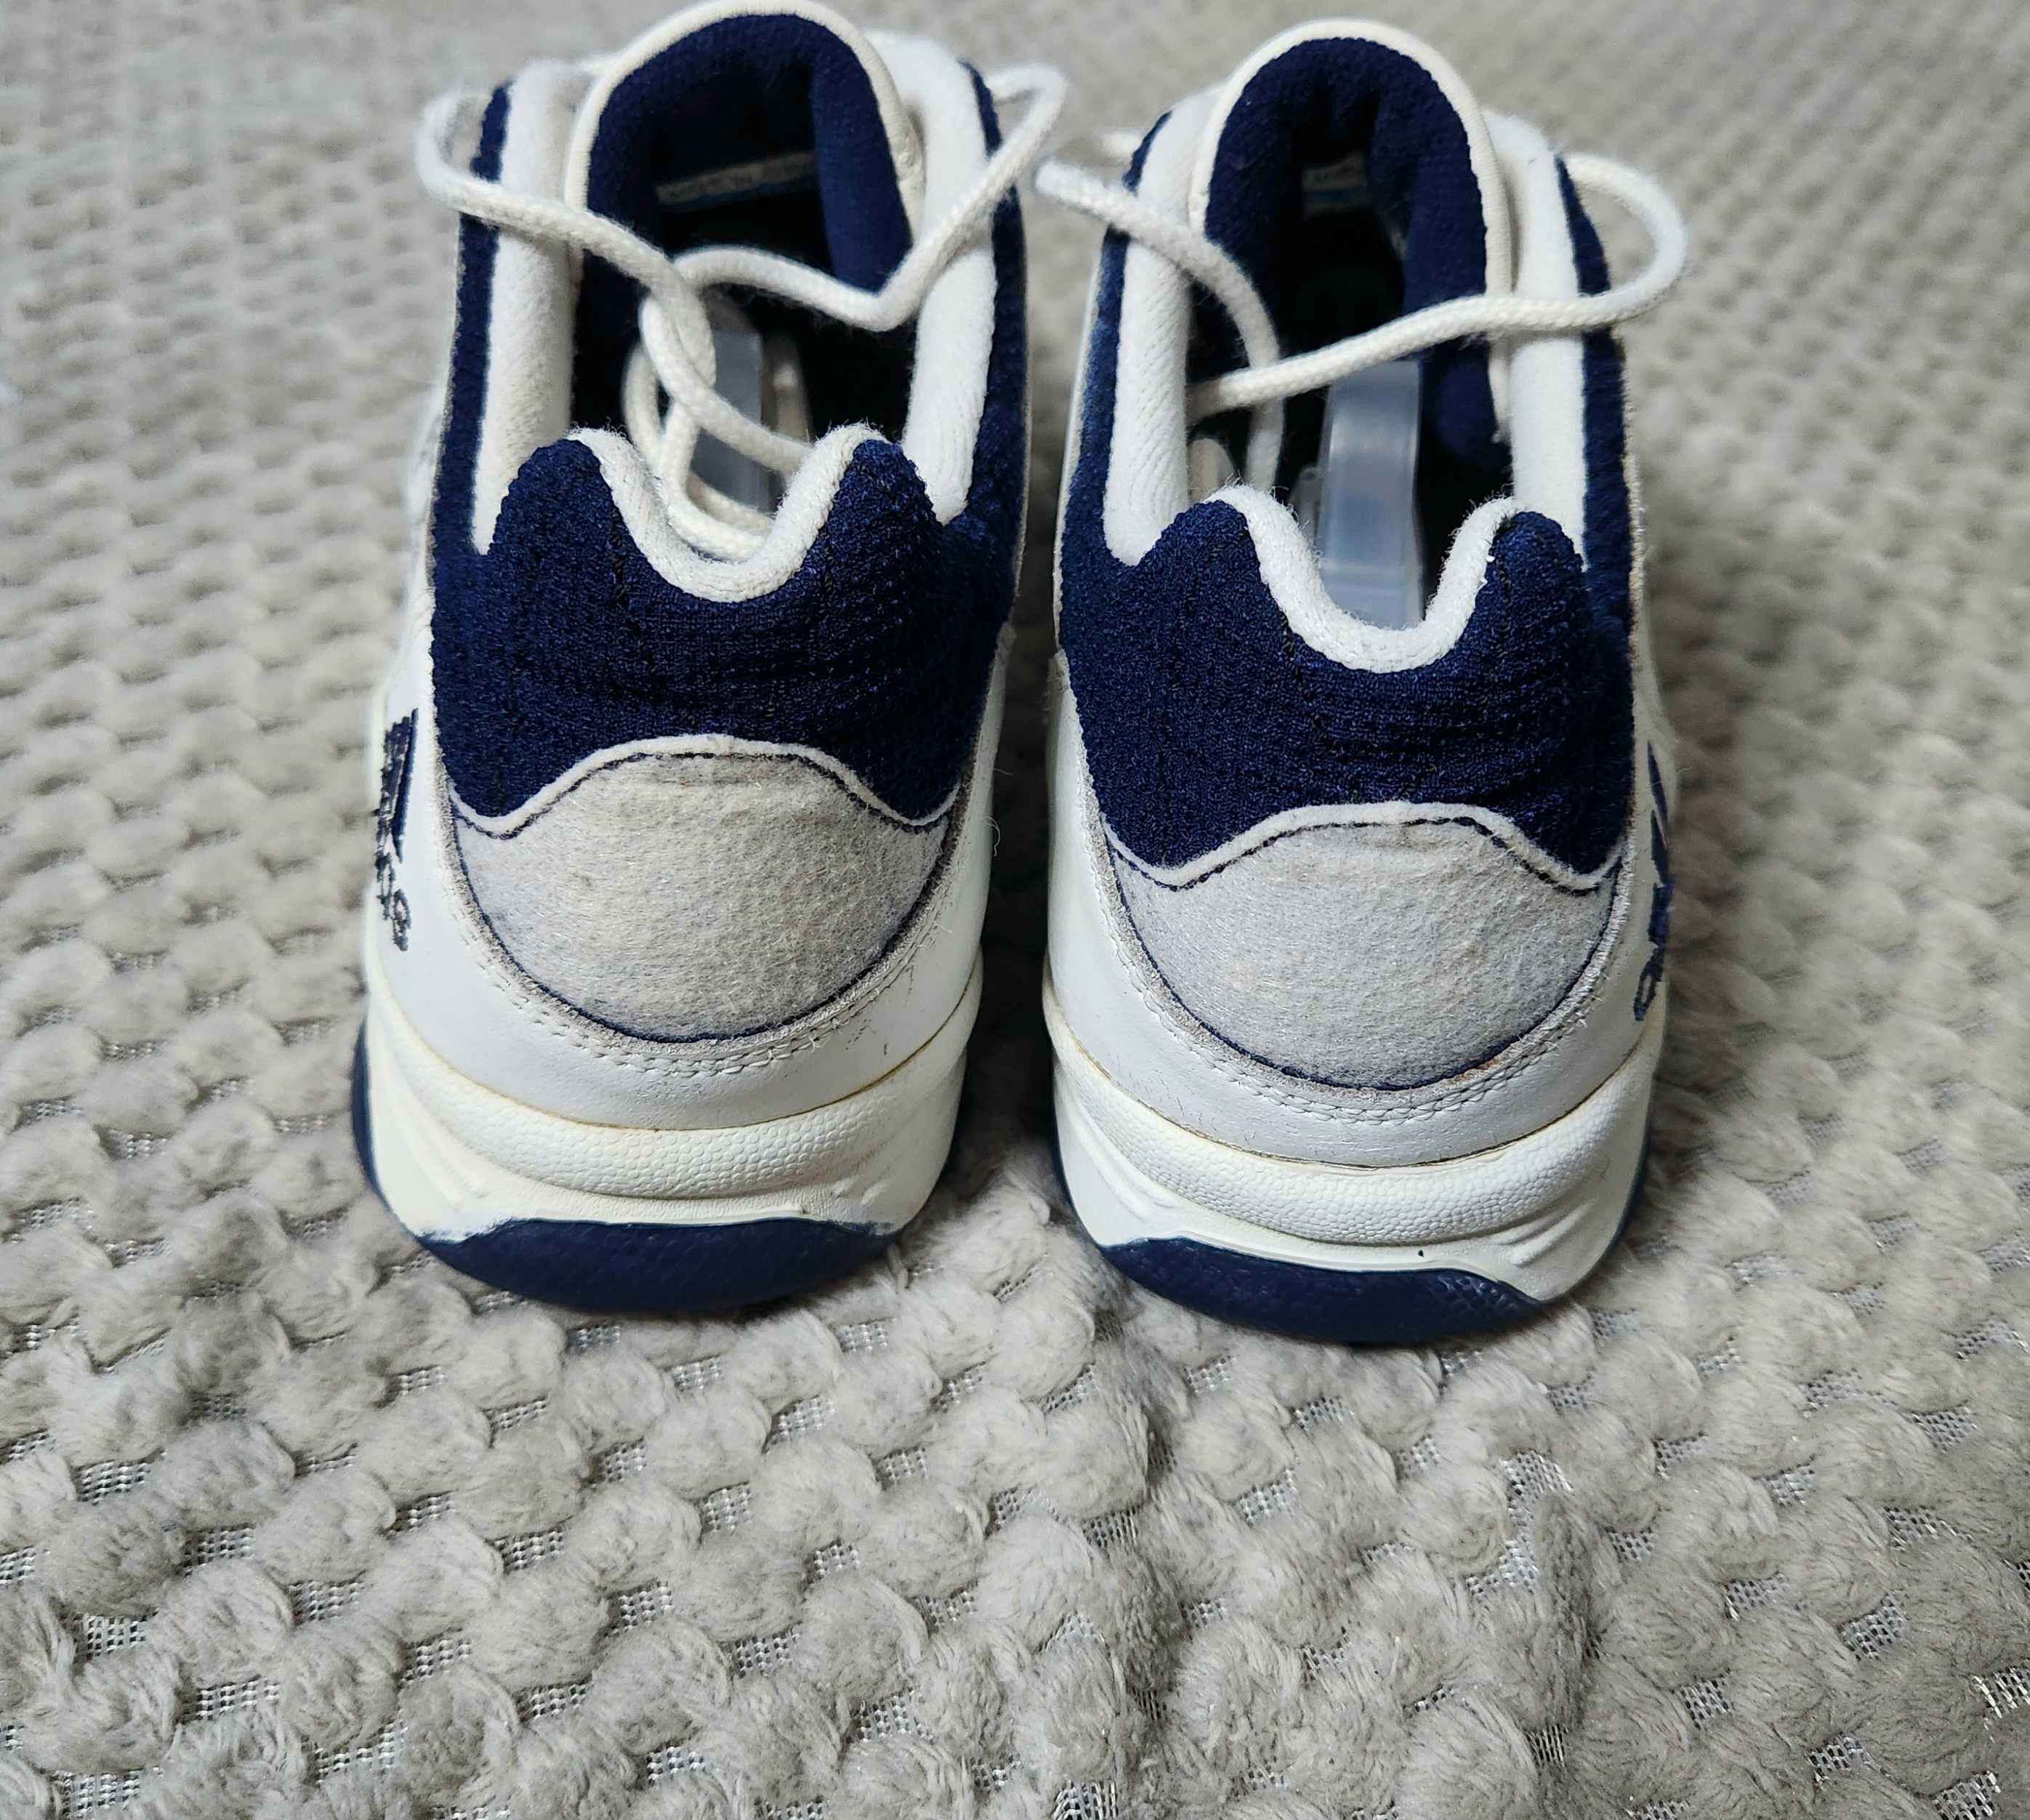 Adidas Vintage 1996 Retro Męskie Buty Sneakersy Streetwear Białe 42